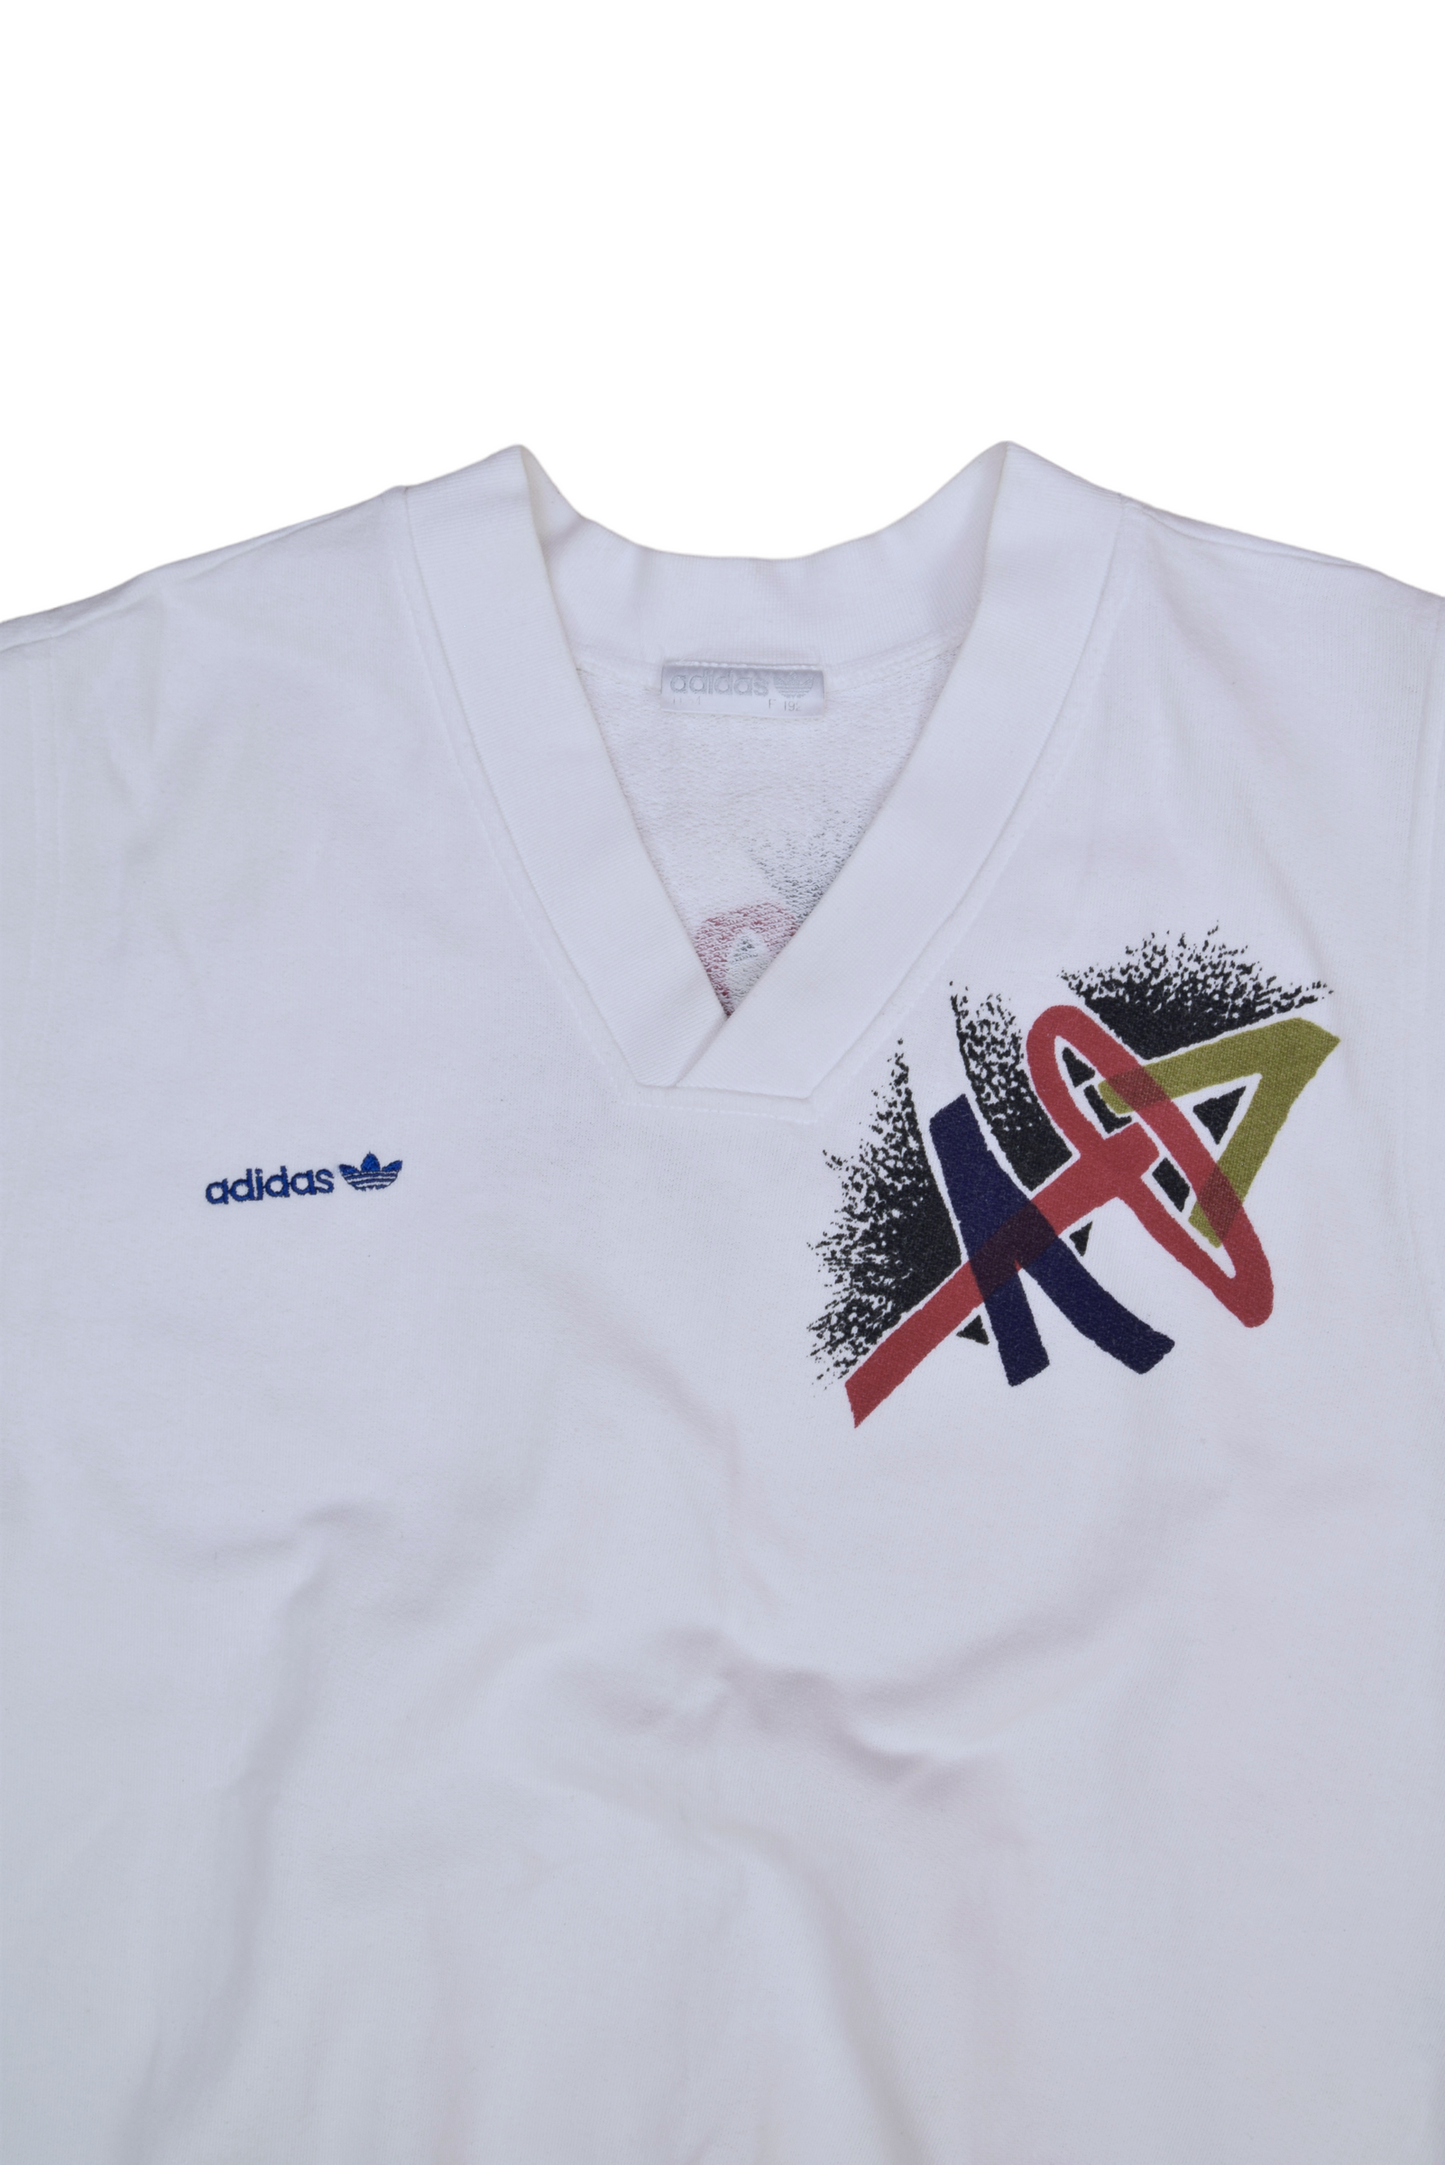 Vintage 90's Adidas Stefan Edberg Tennis Vest White Size L-XL